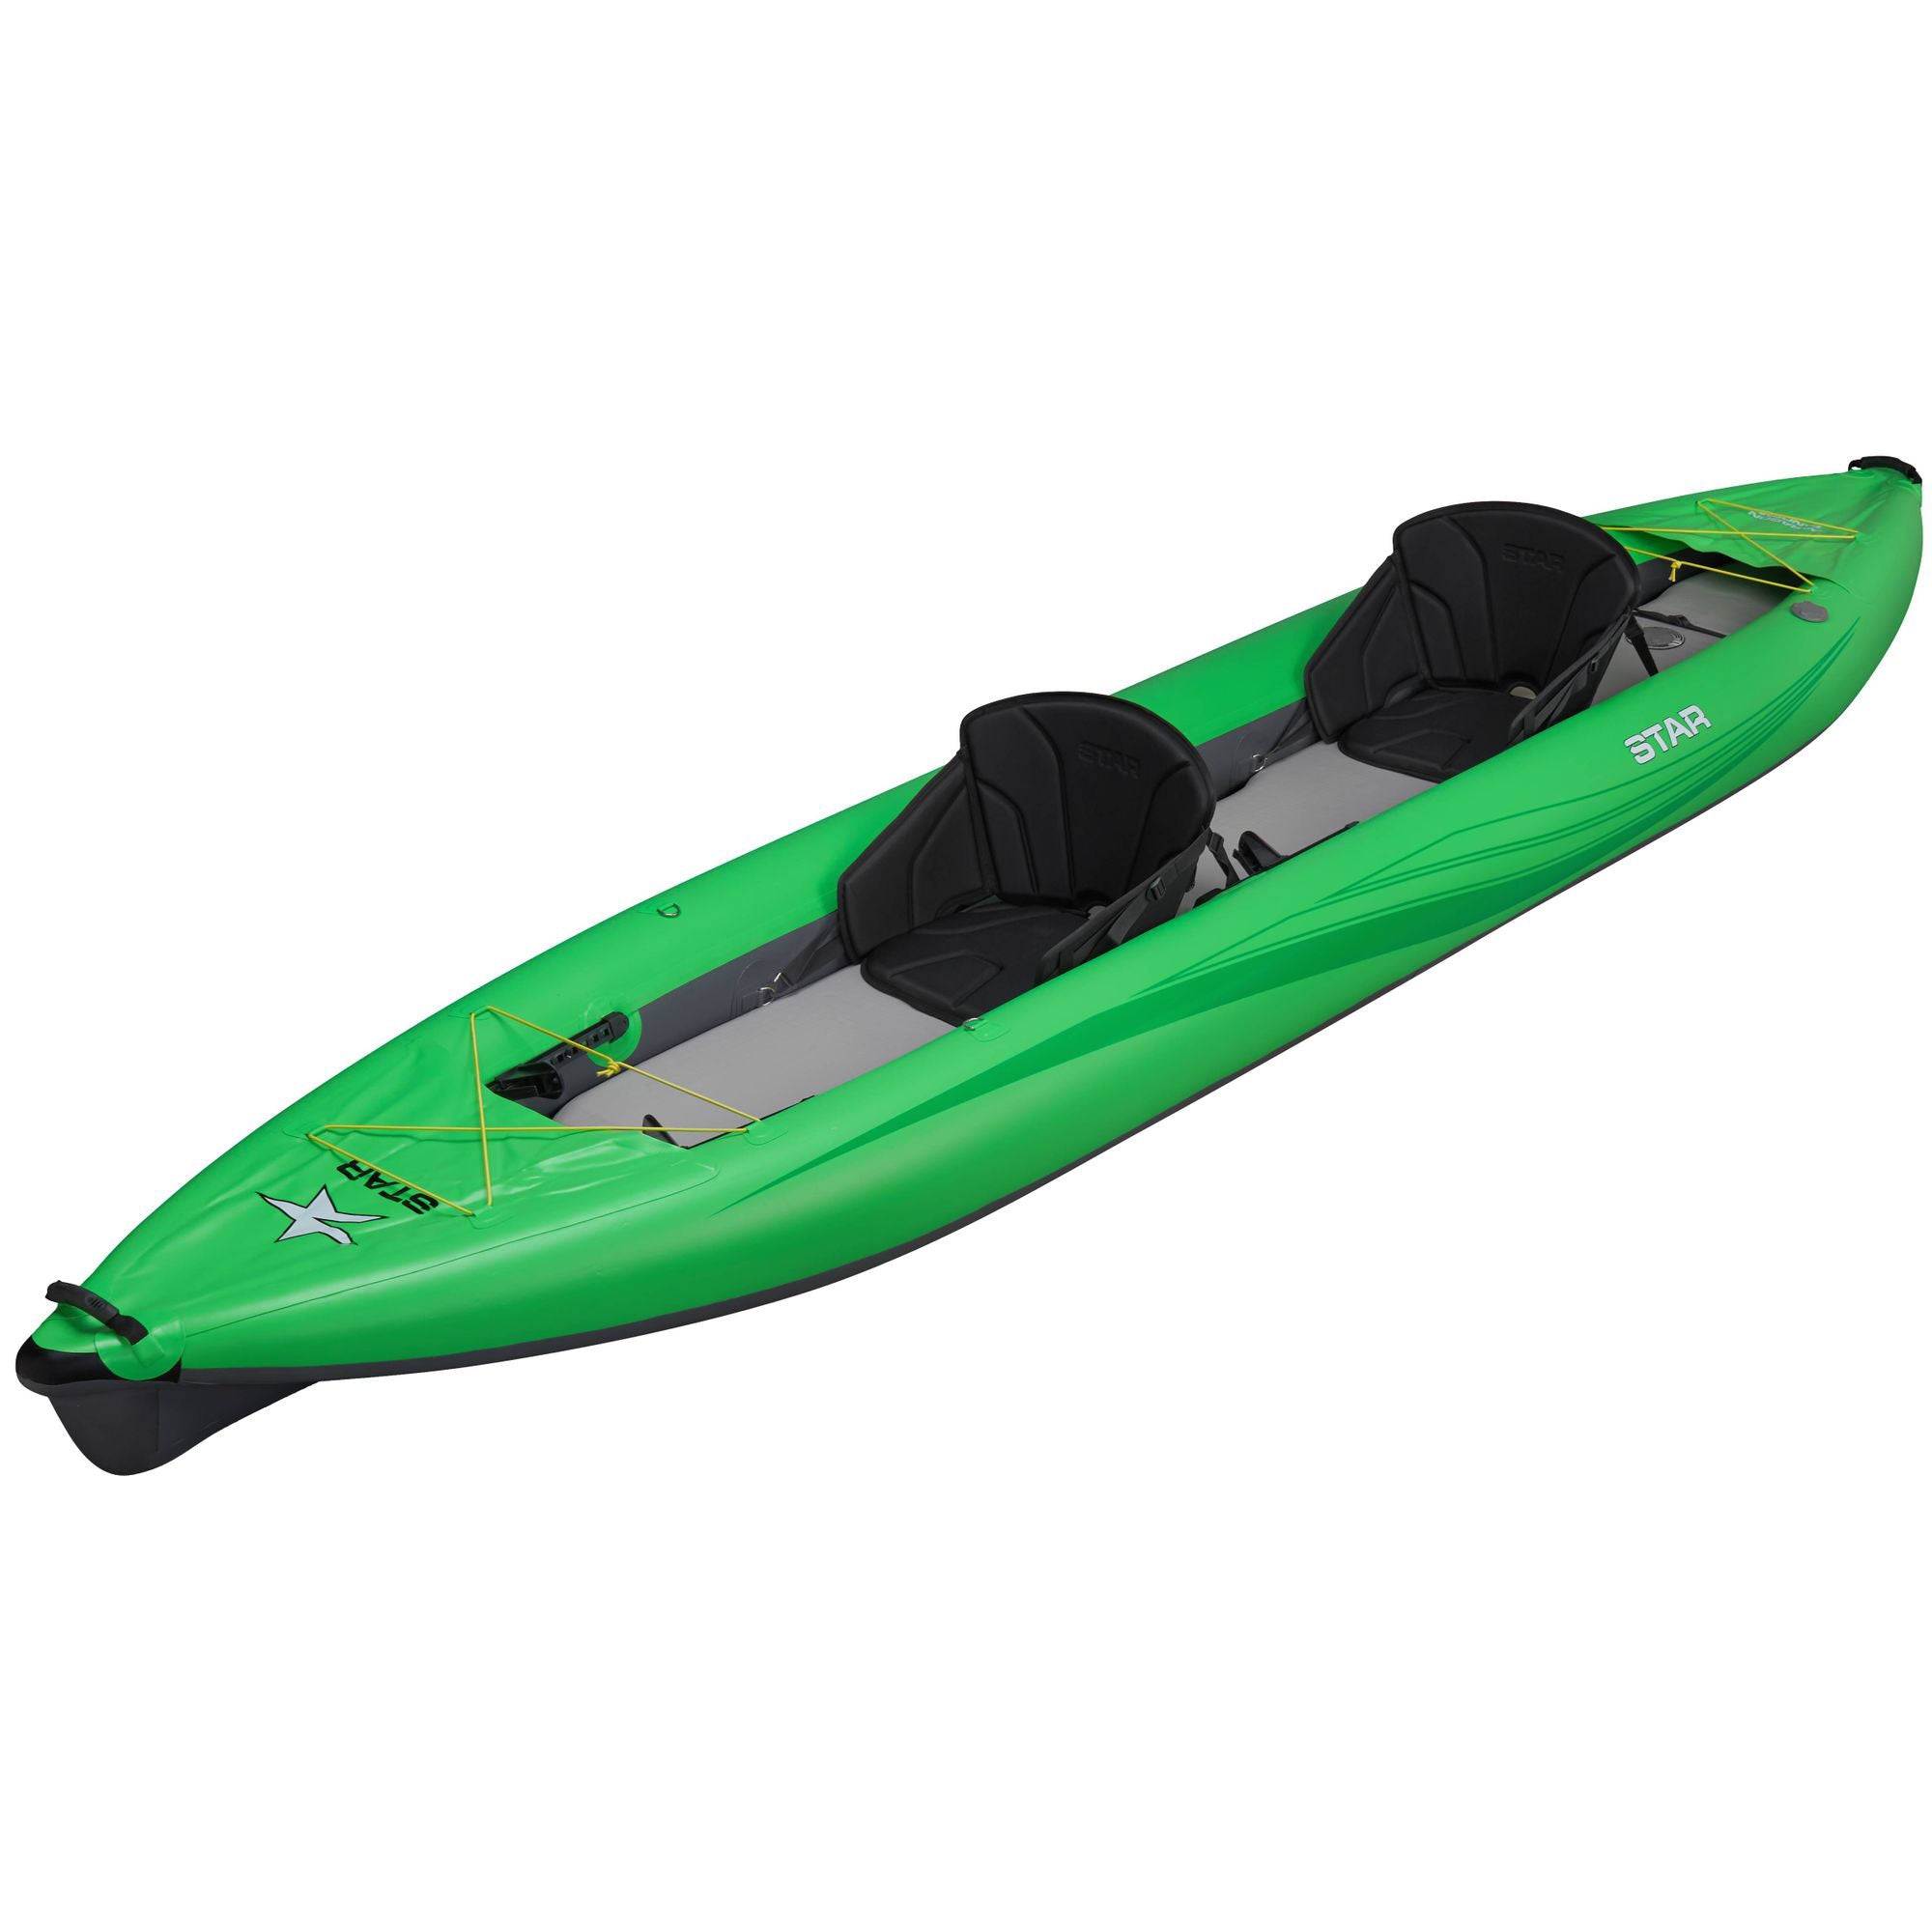 Star Paragon Tandem Inflatable Kayak in Lime angle